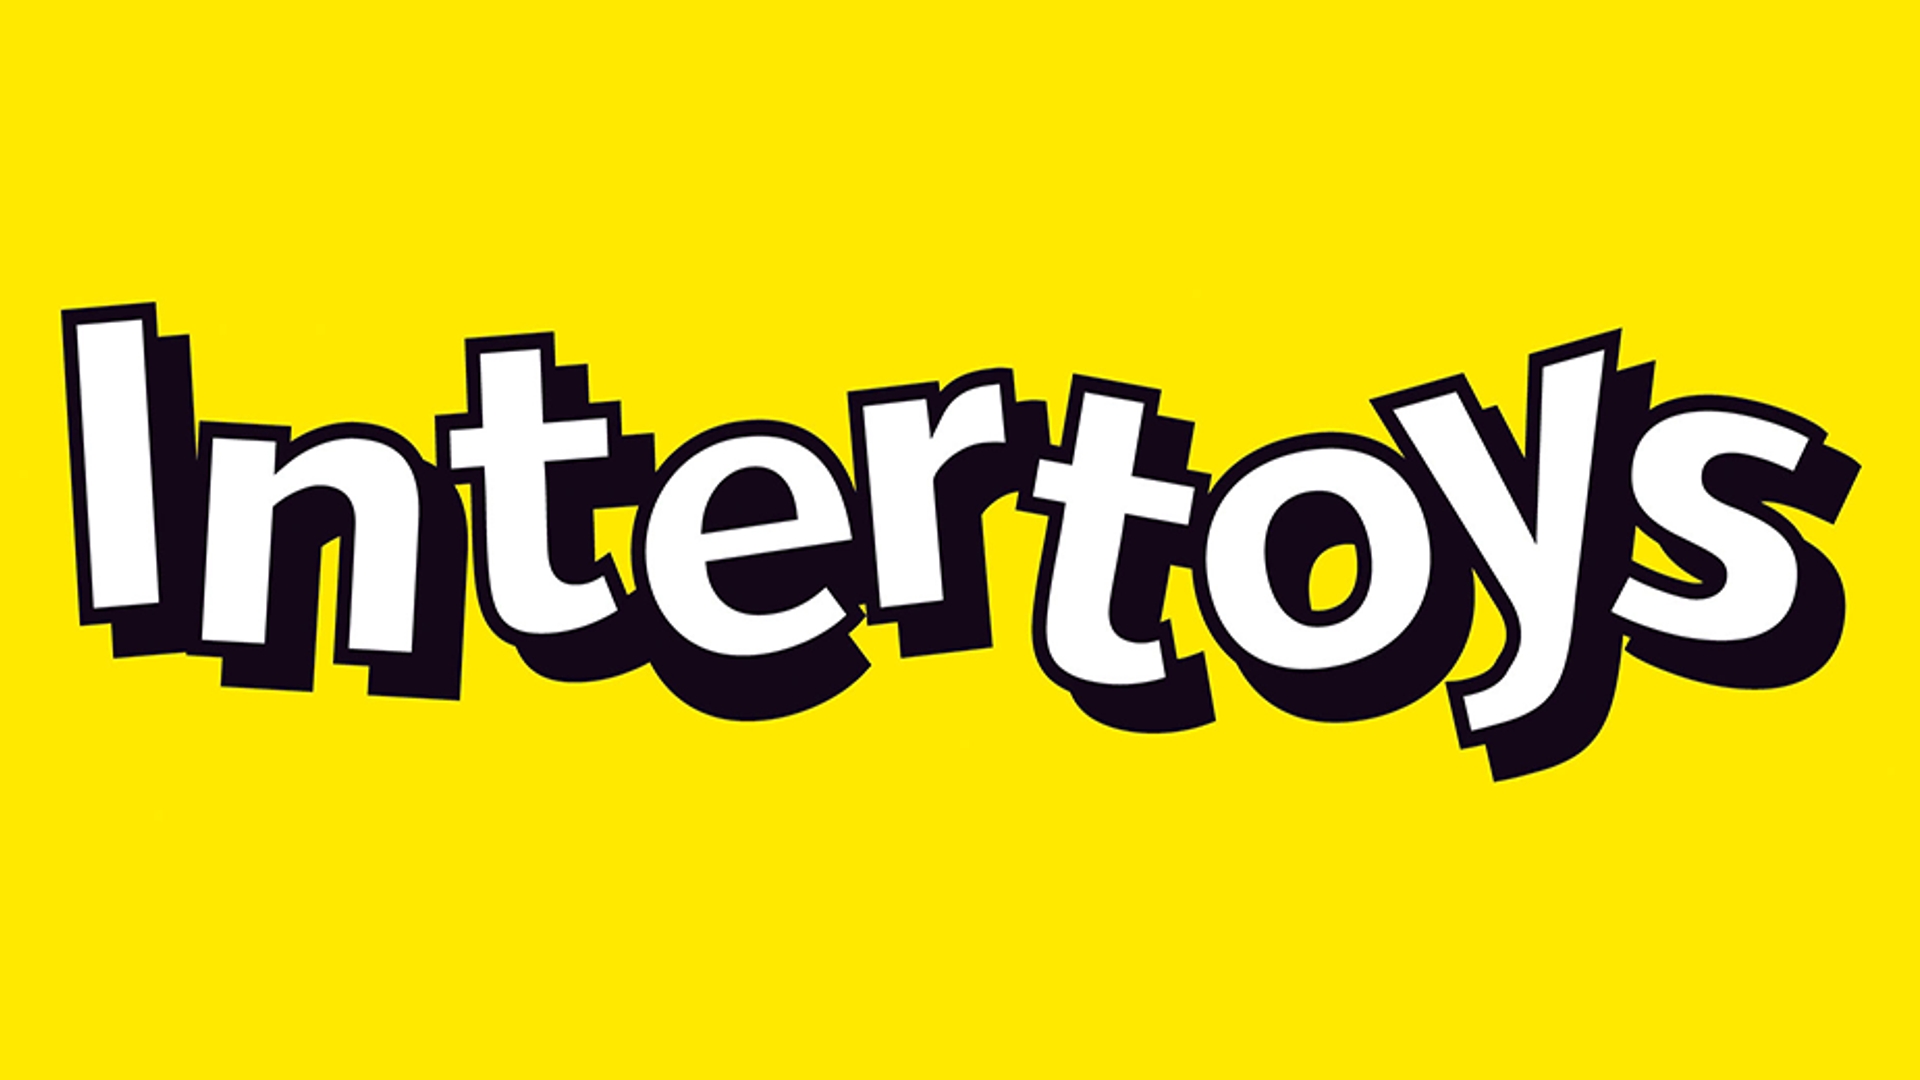 logo Intertoys 930